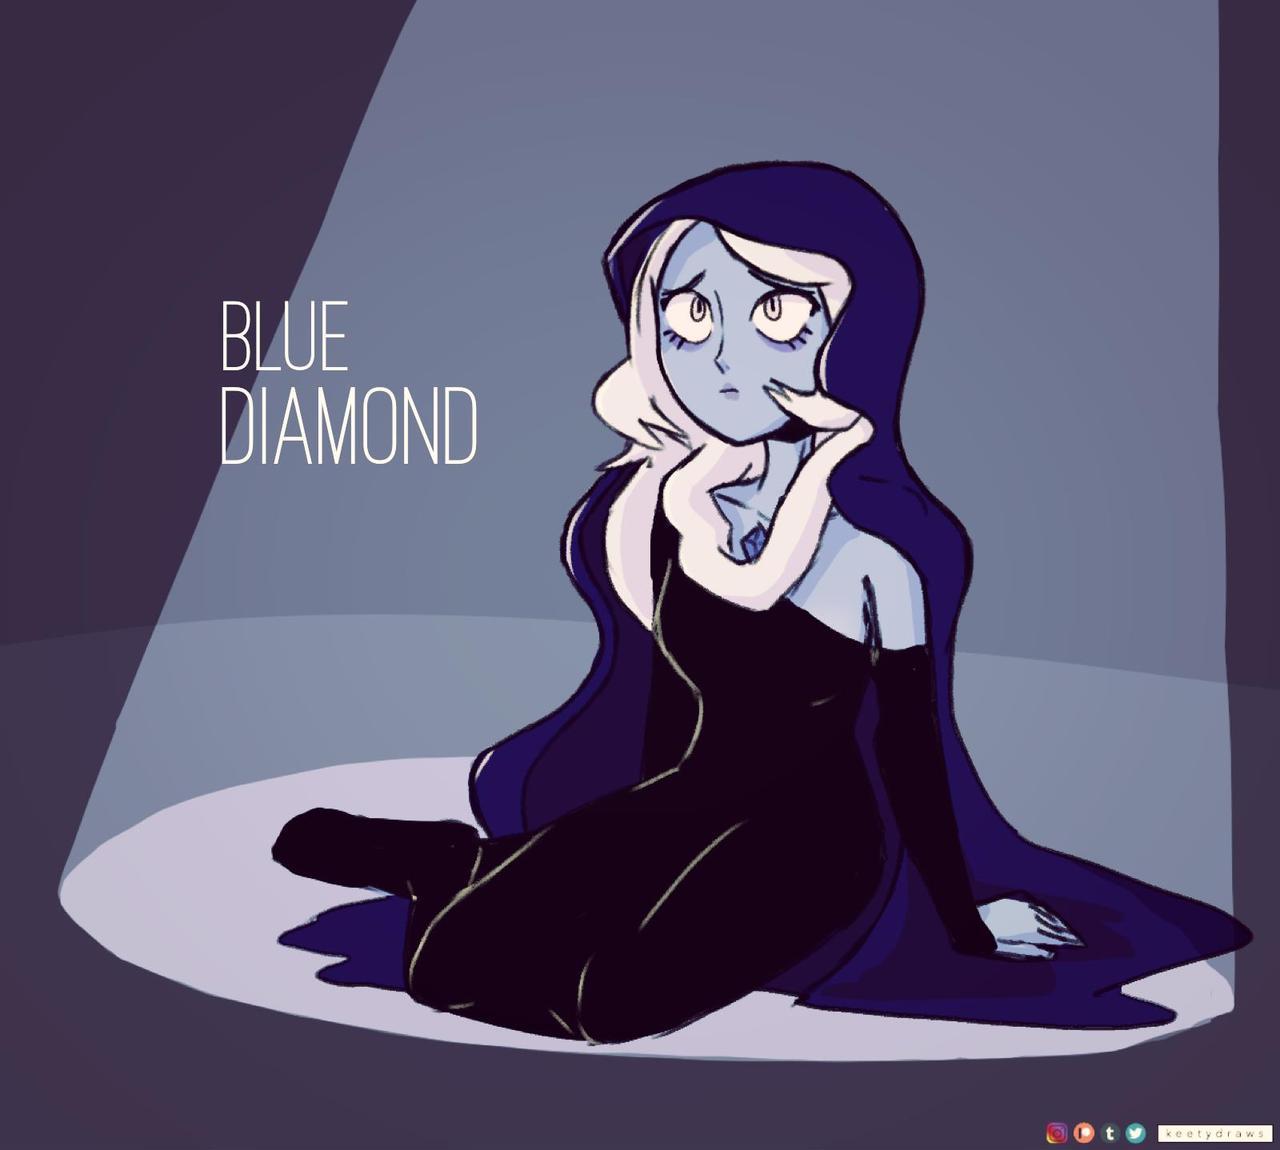 Sad Blue Diamond :(